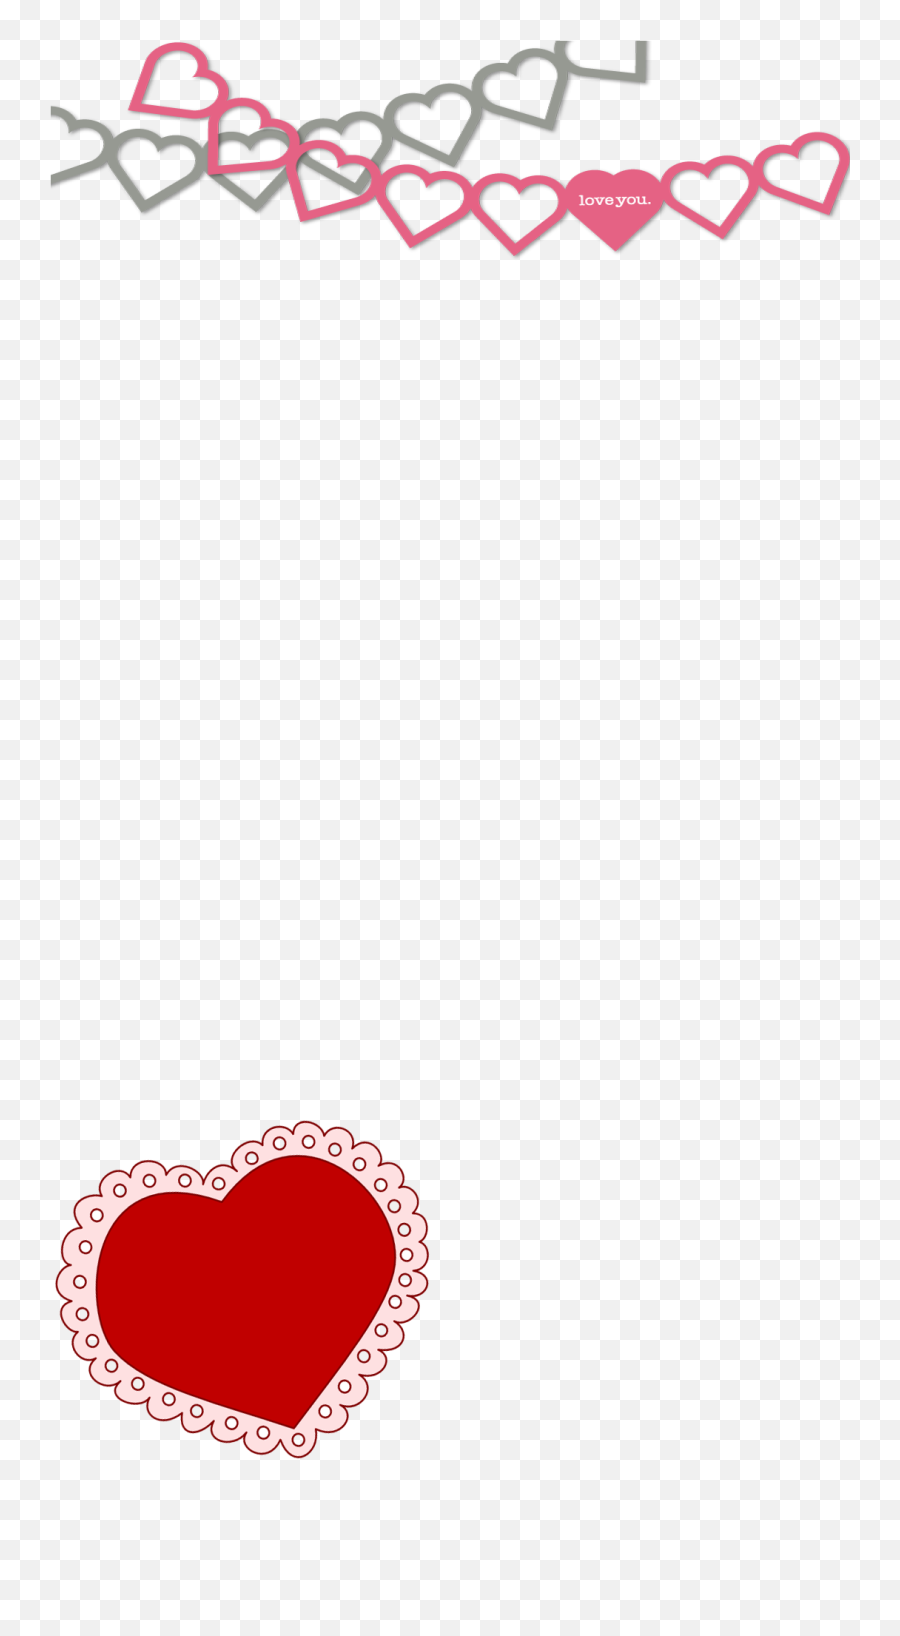 Our Hearts Valentines Day Snapchat Filter - Heart Emoji,Heart Emoji On Snapchat